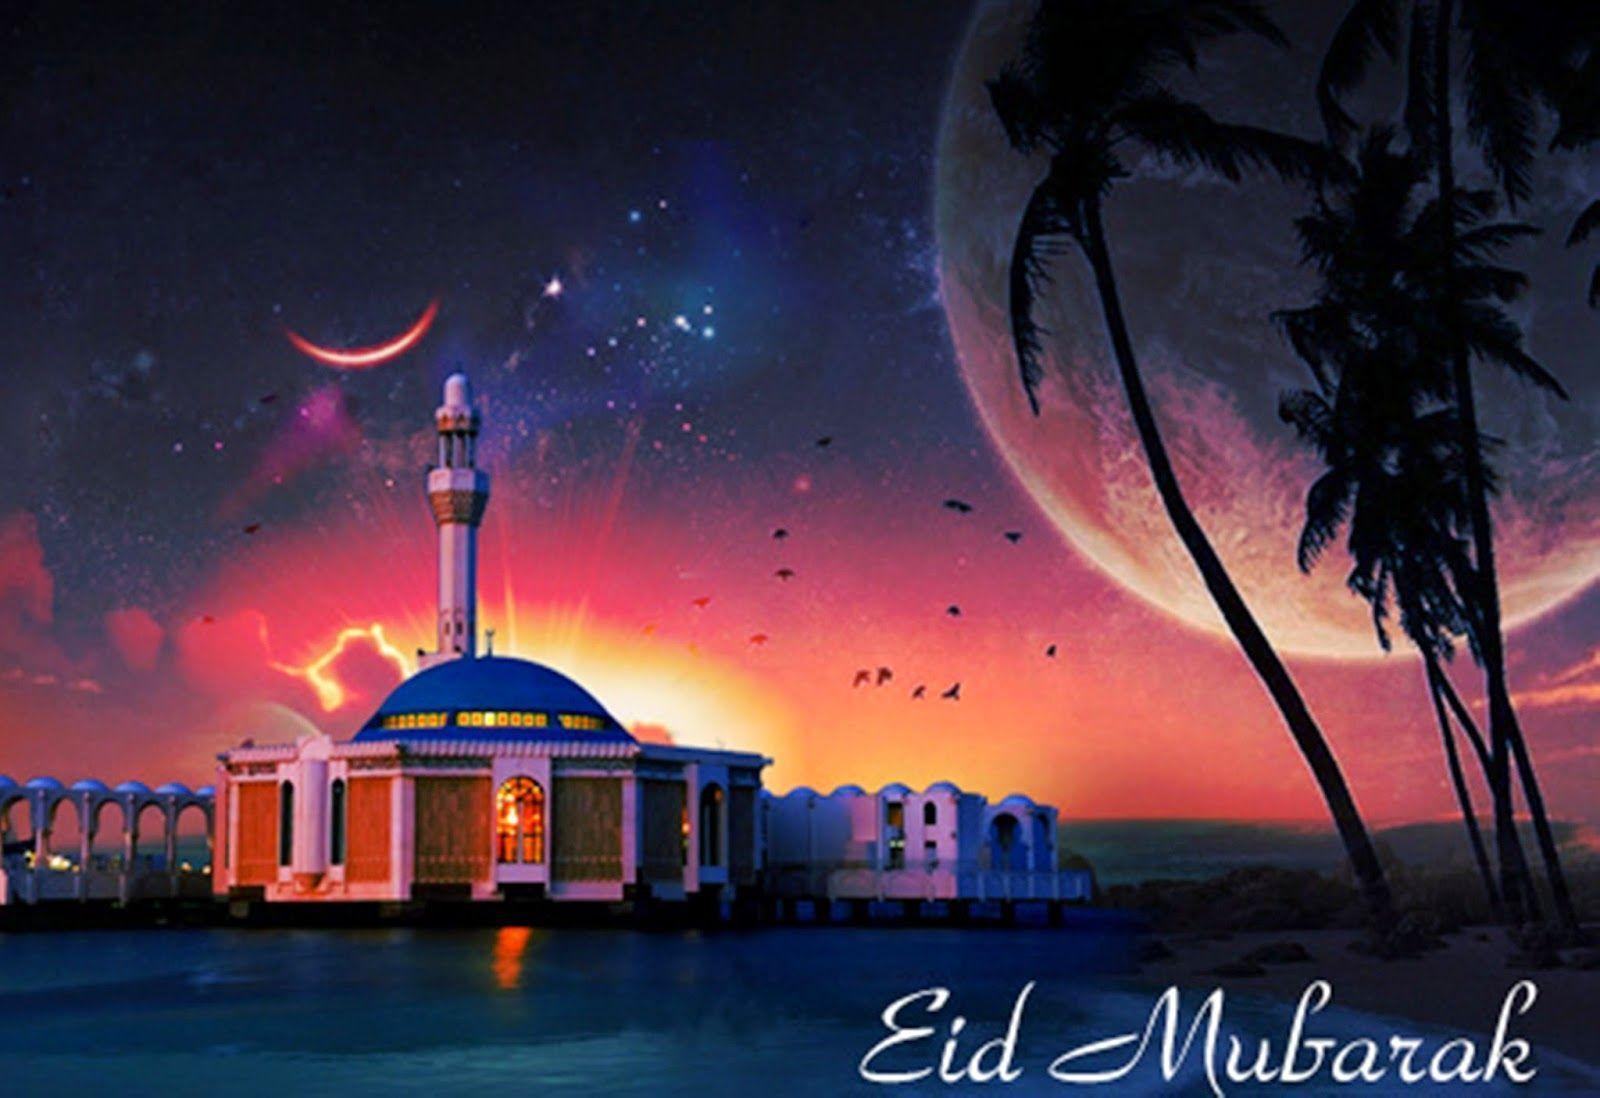 Ramzan Eid Mubarak Images Hd - 100 Eid Mubarak 2021 Pictures Free